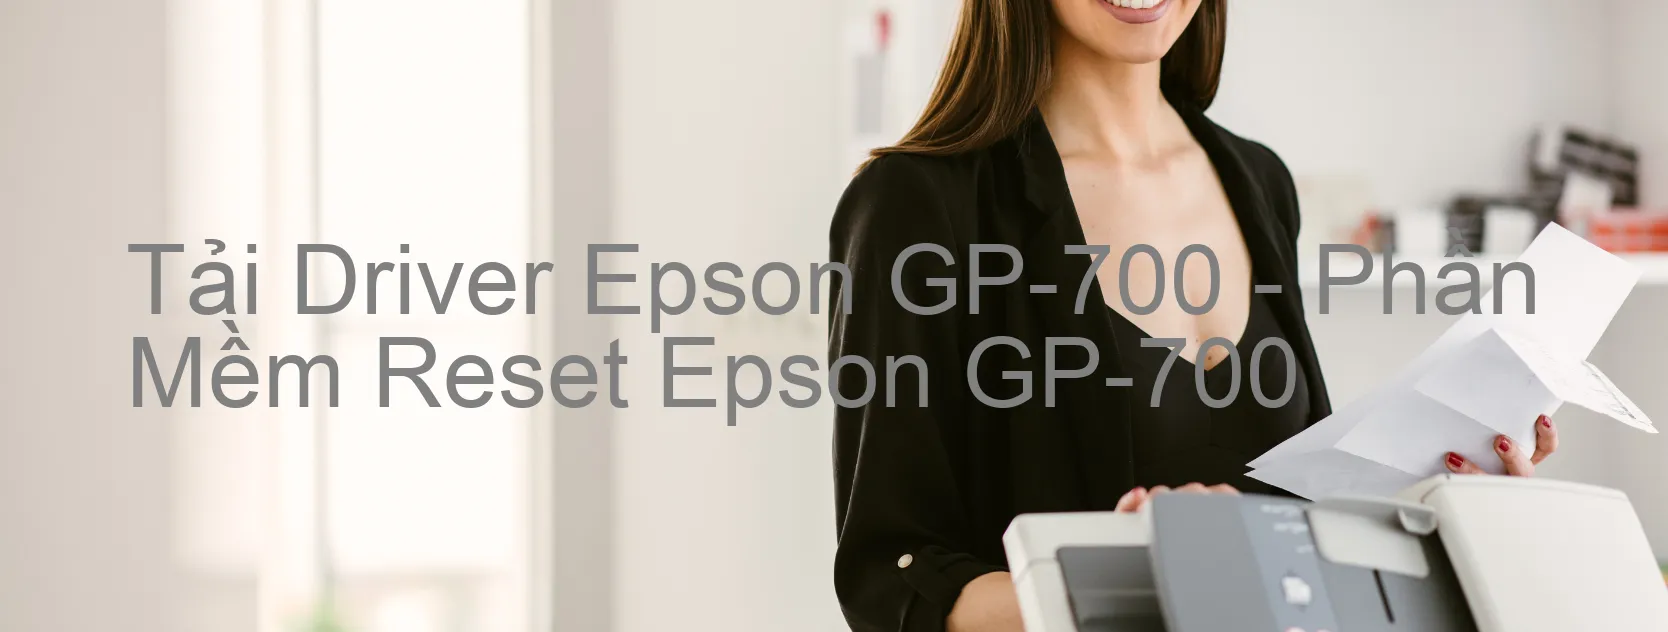 Driver Epson GP-700, Phần Mềm Reset Epson GP-700